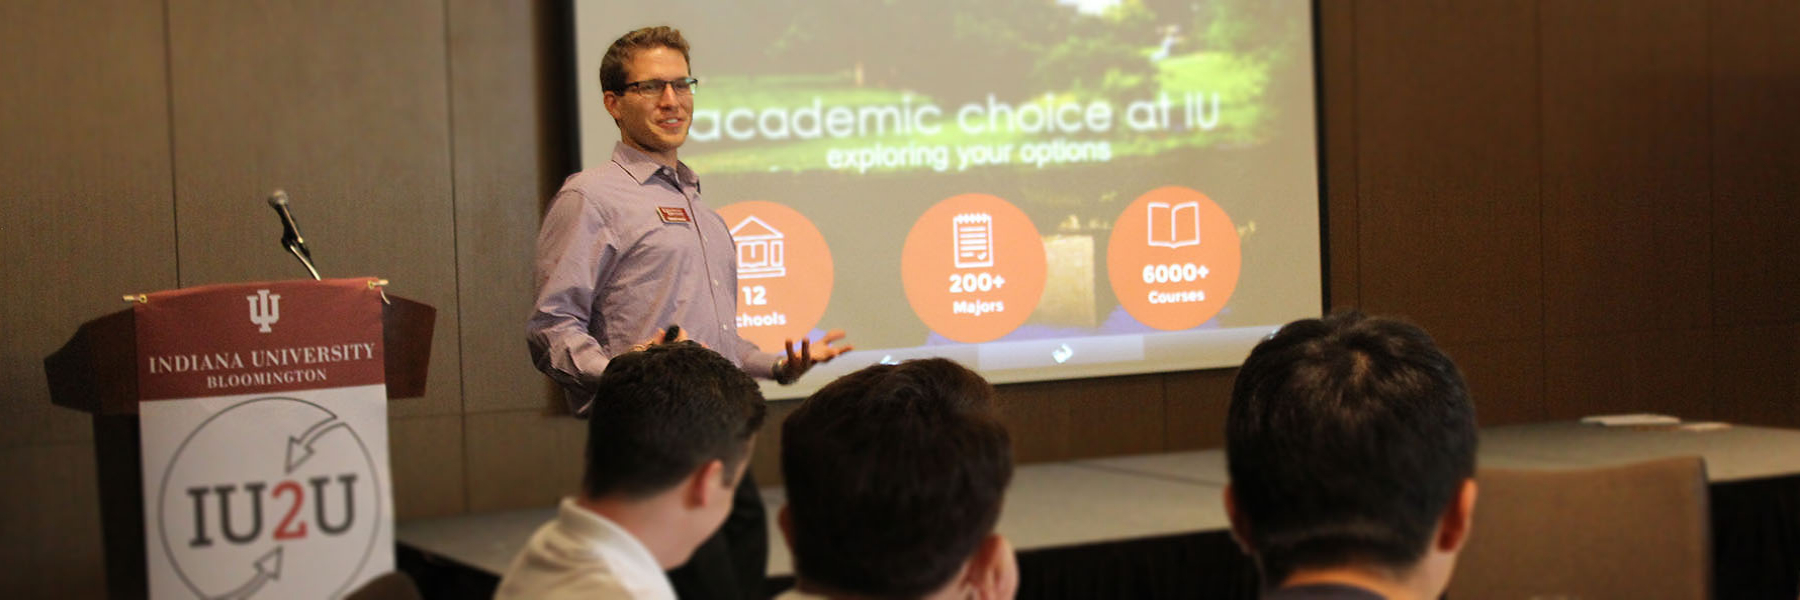 Academic choice at IU presentation photo